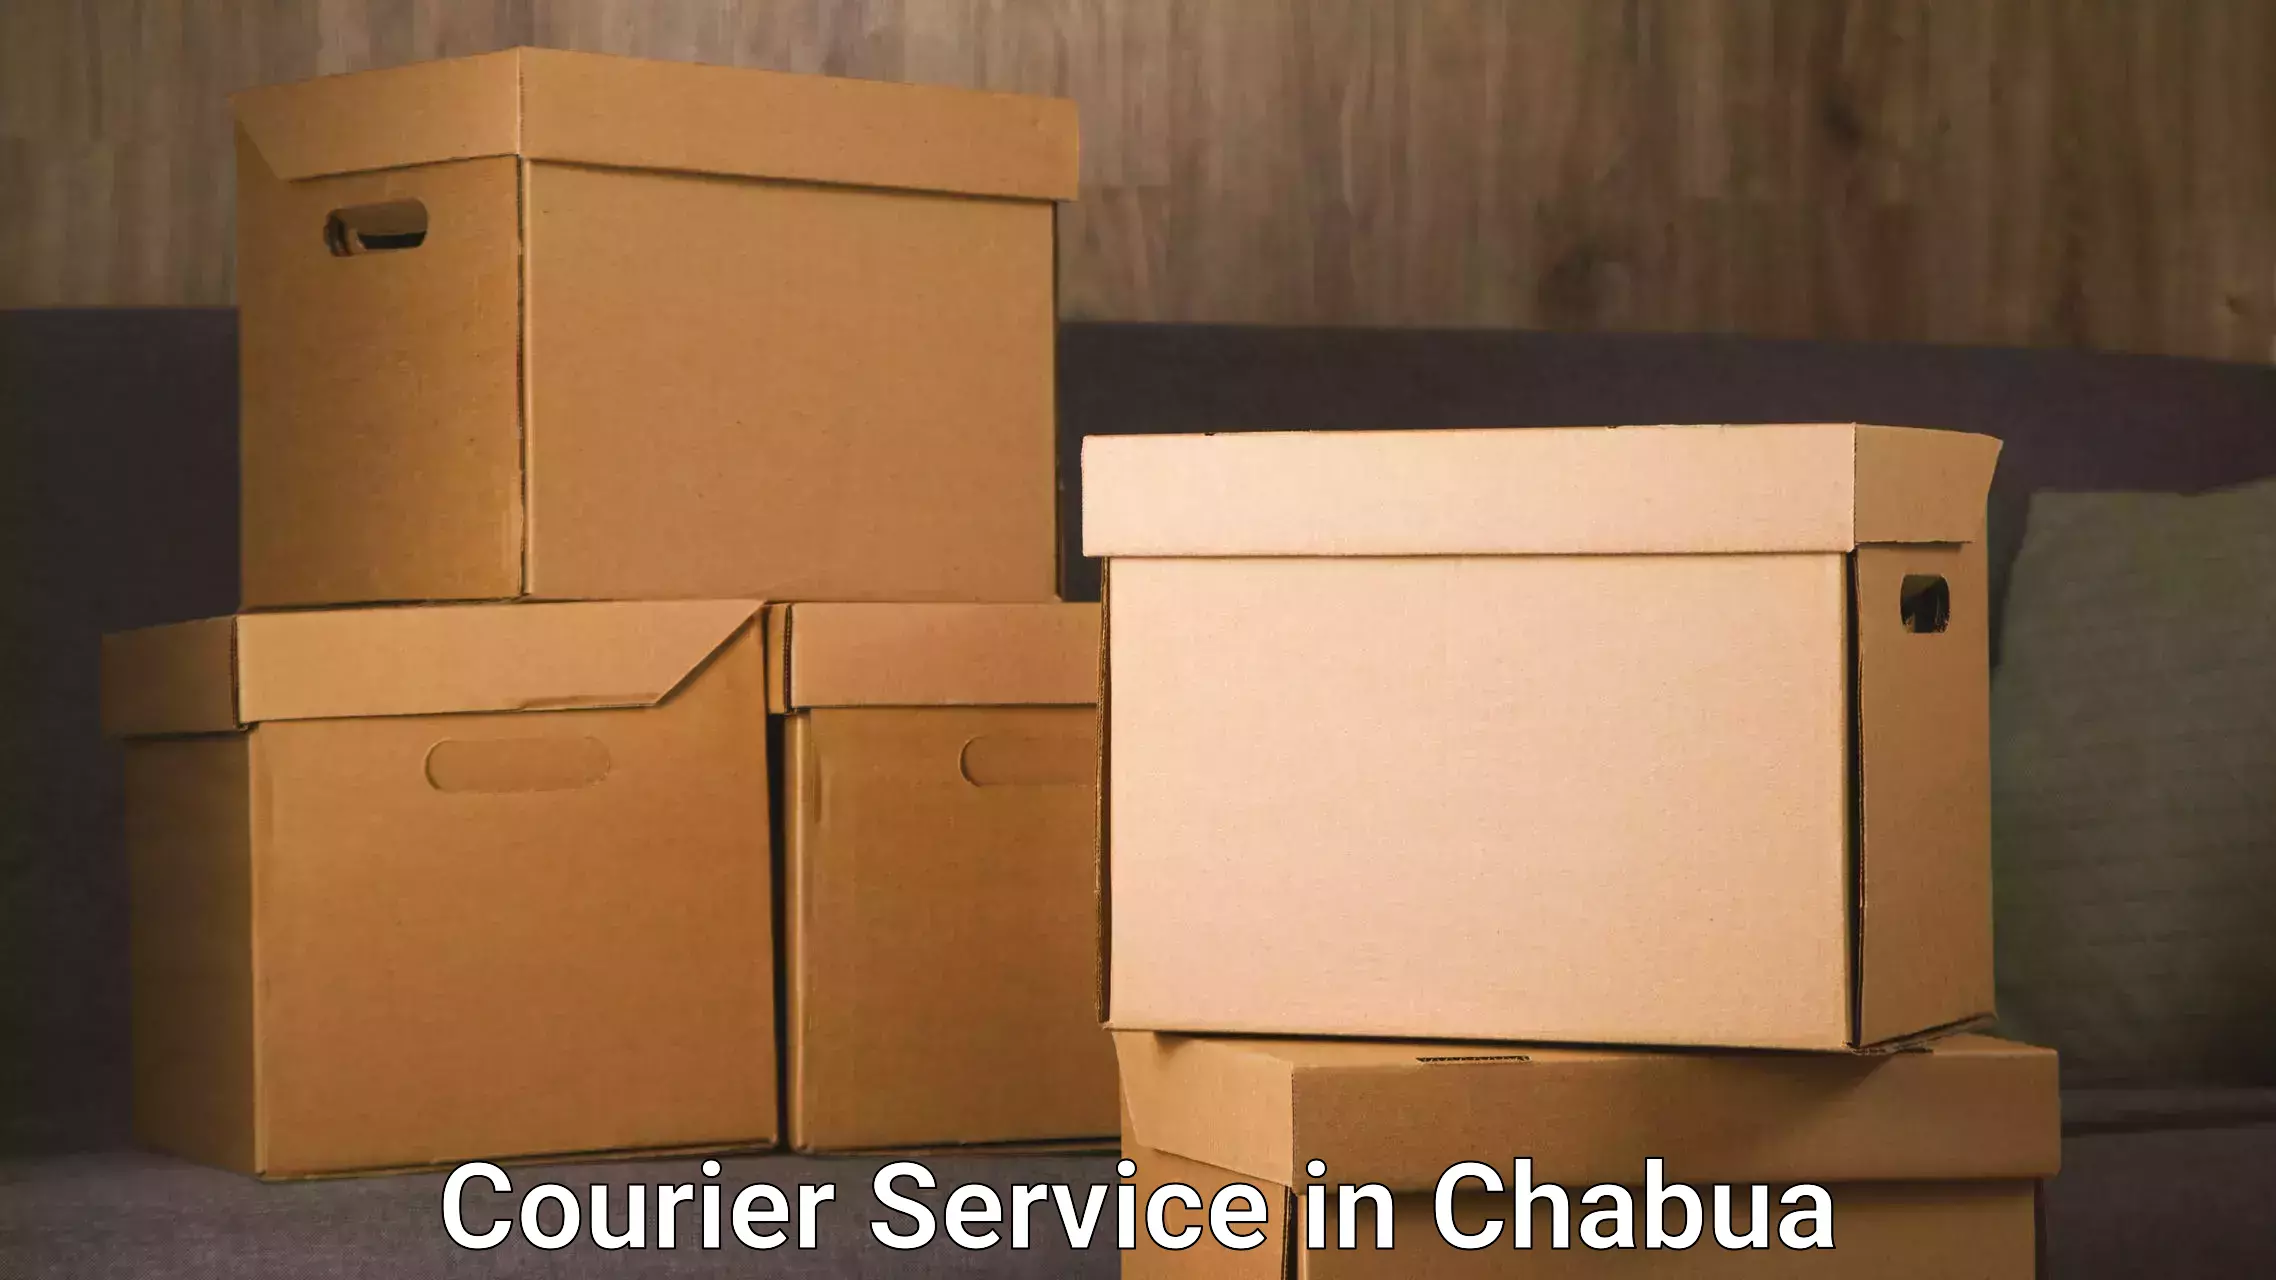 Innovative logistics solutions in Chabua